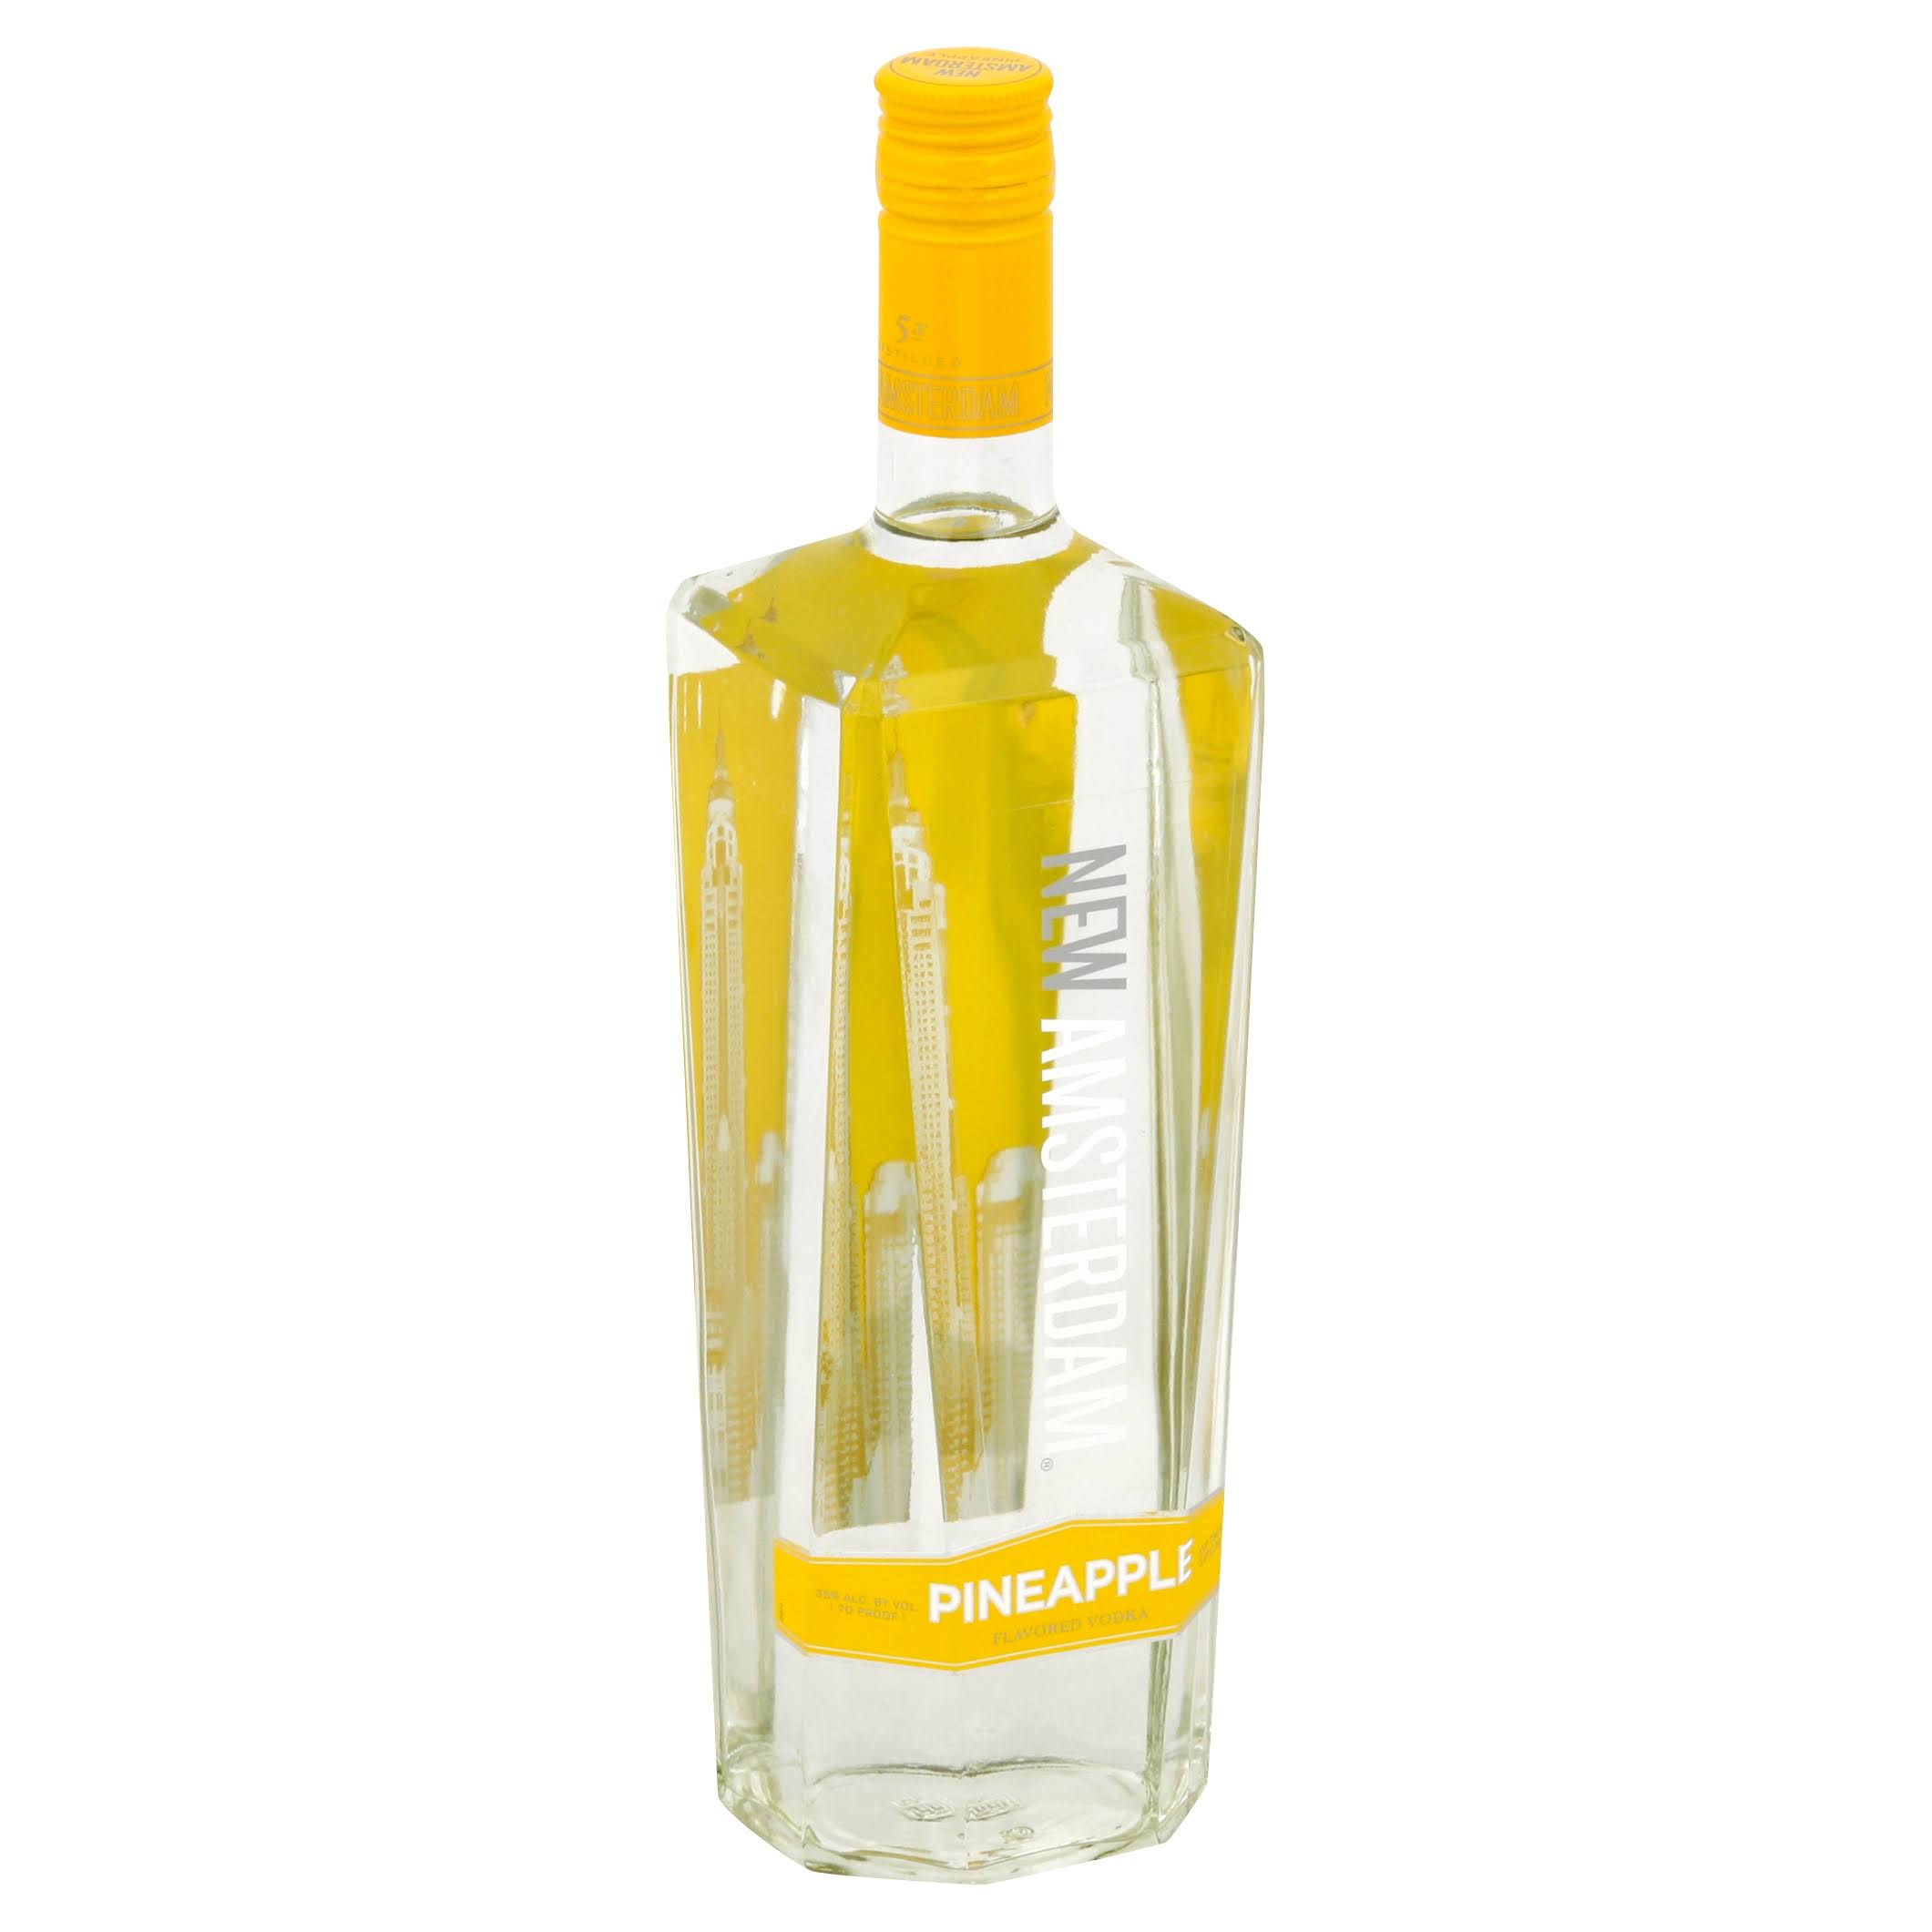 New Amsterdam Vodka, Pineapple Flavored - 1 l